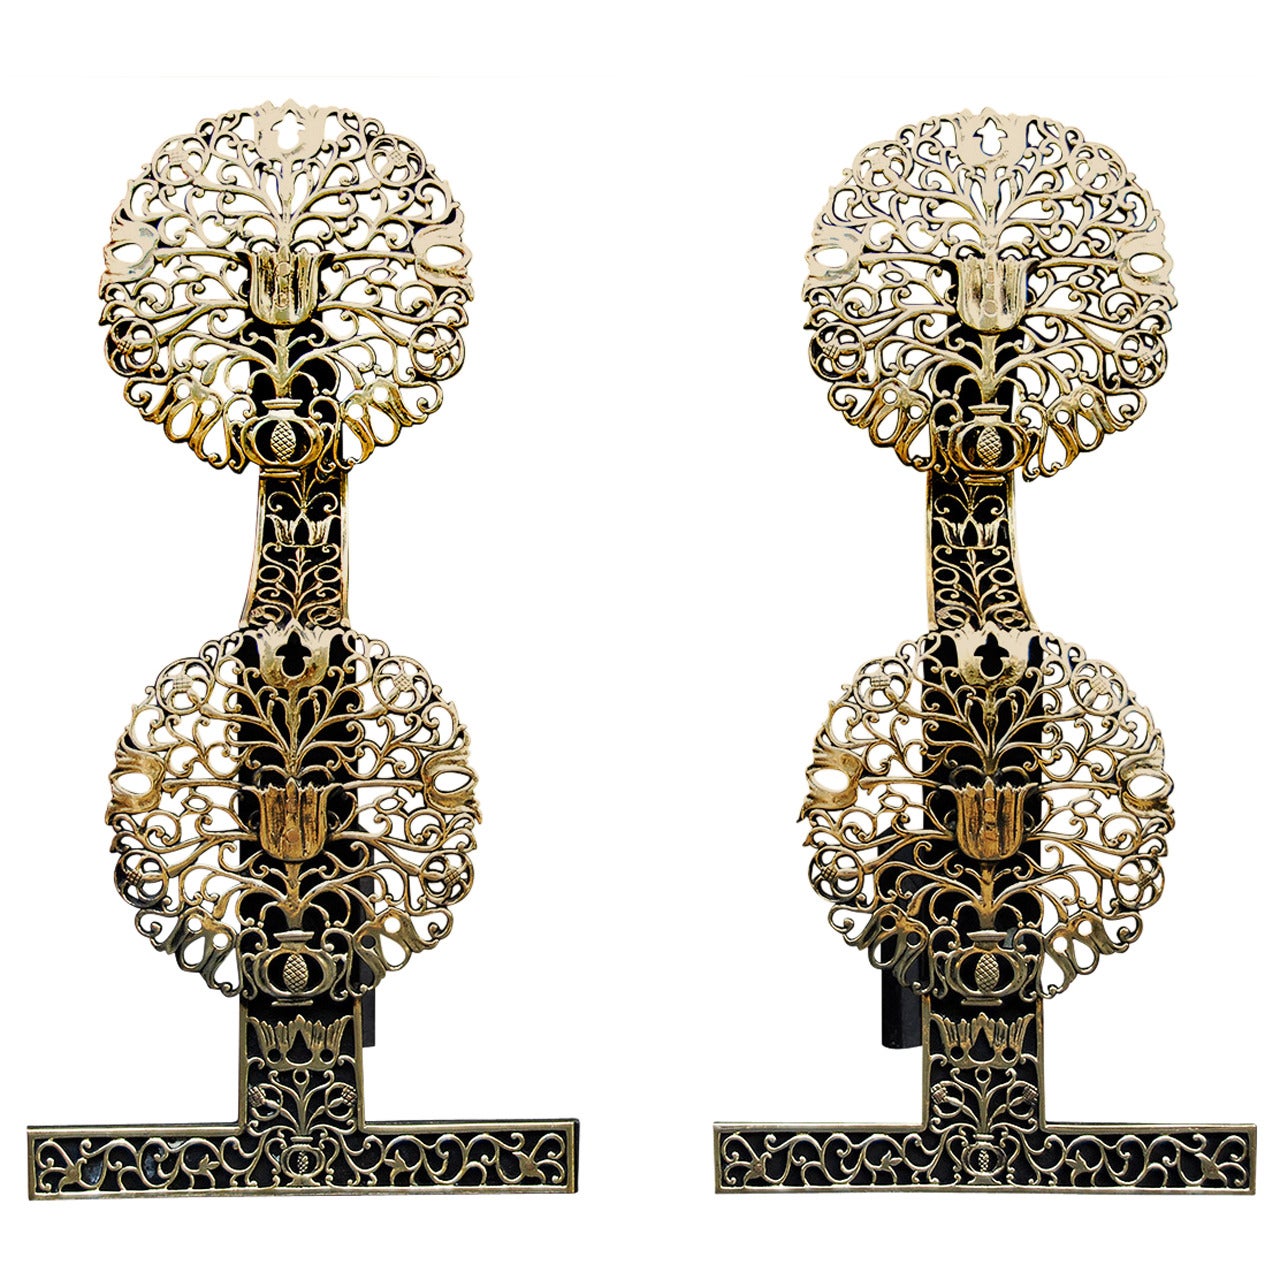 Pair of 19th century English brass andirons